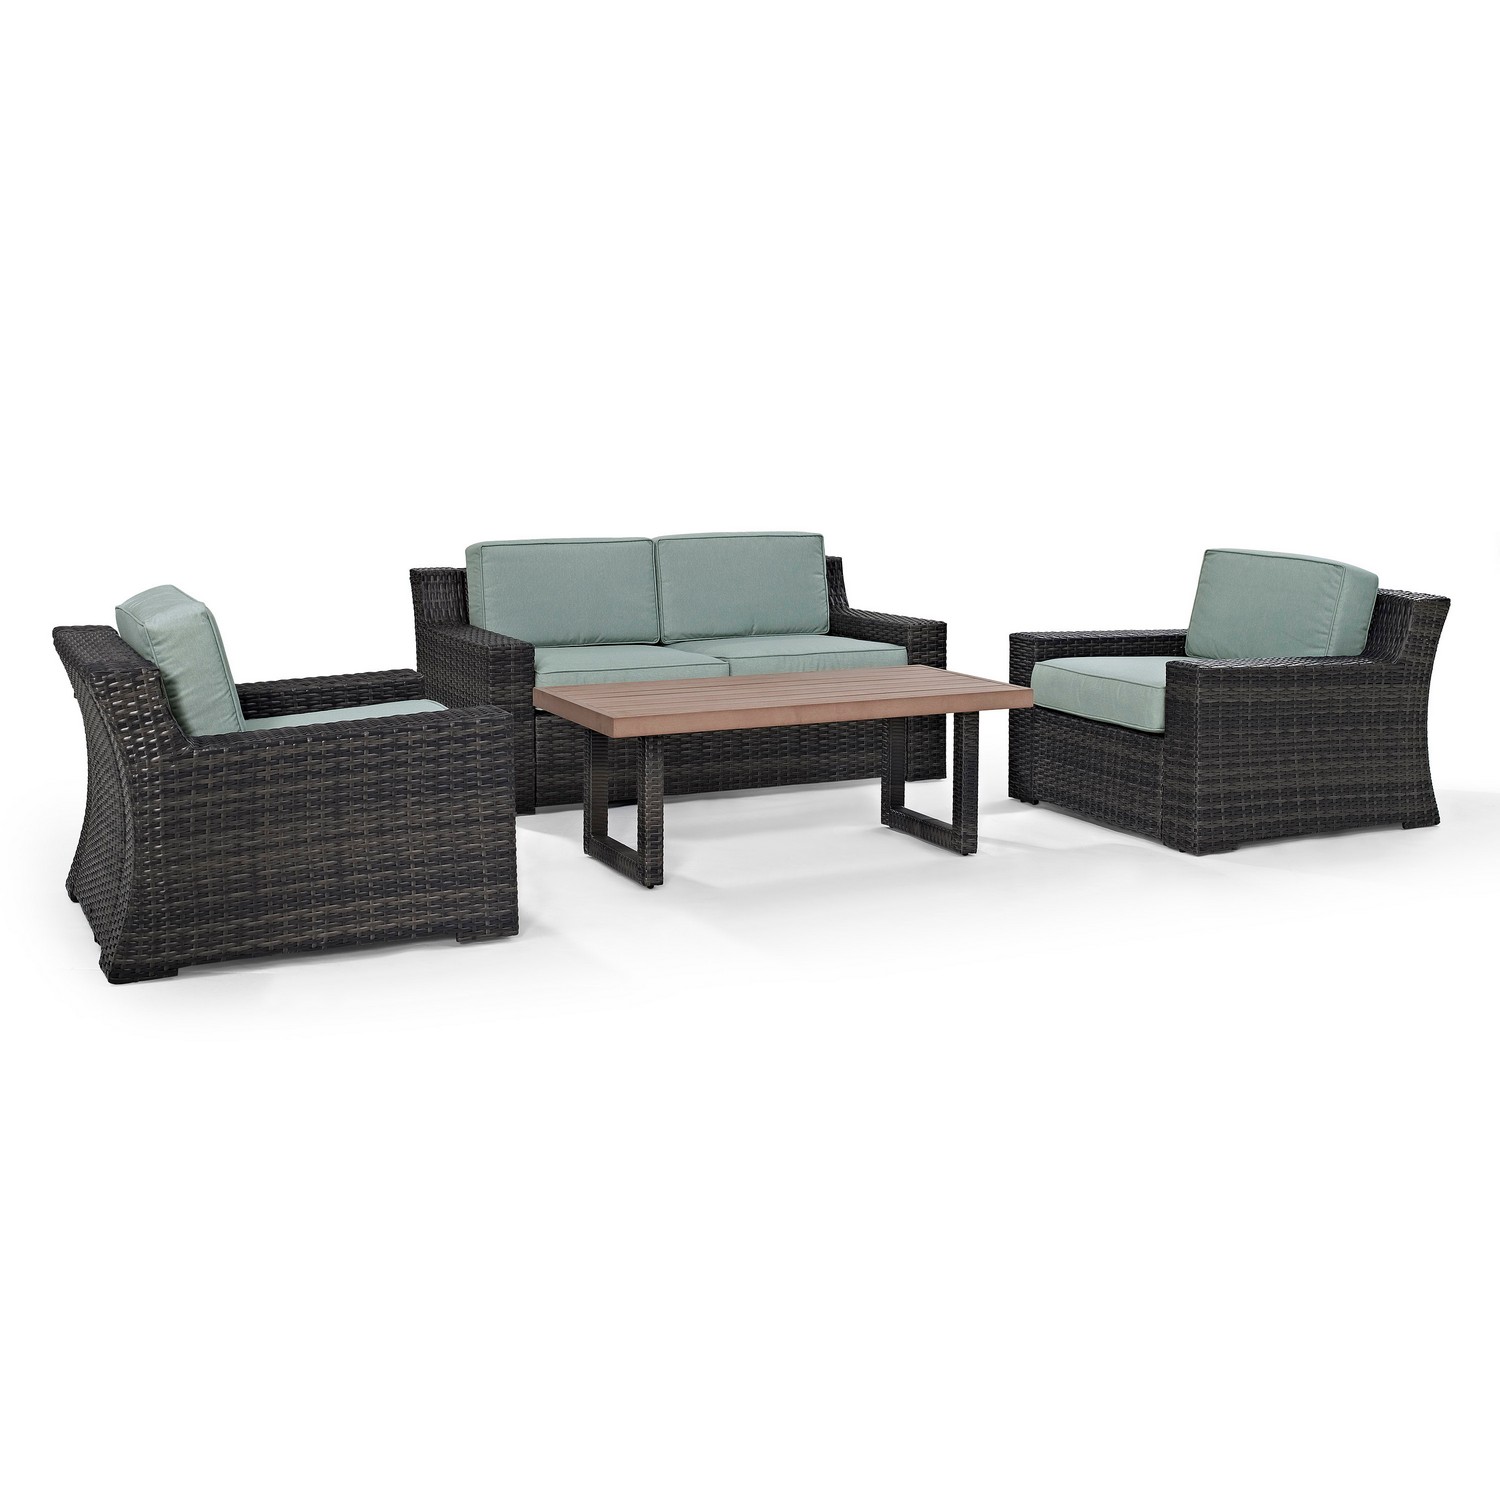 Crosley Beaufort 4-PC Outdoor Wicker Conversation Set - Loveseat, 2 Chairs, Coffee Table - Mist/Brown